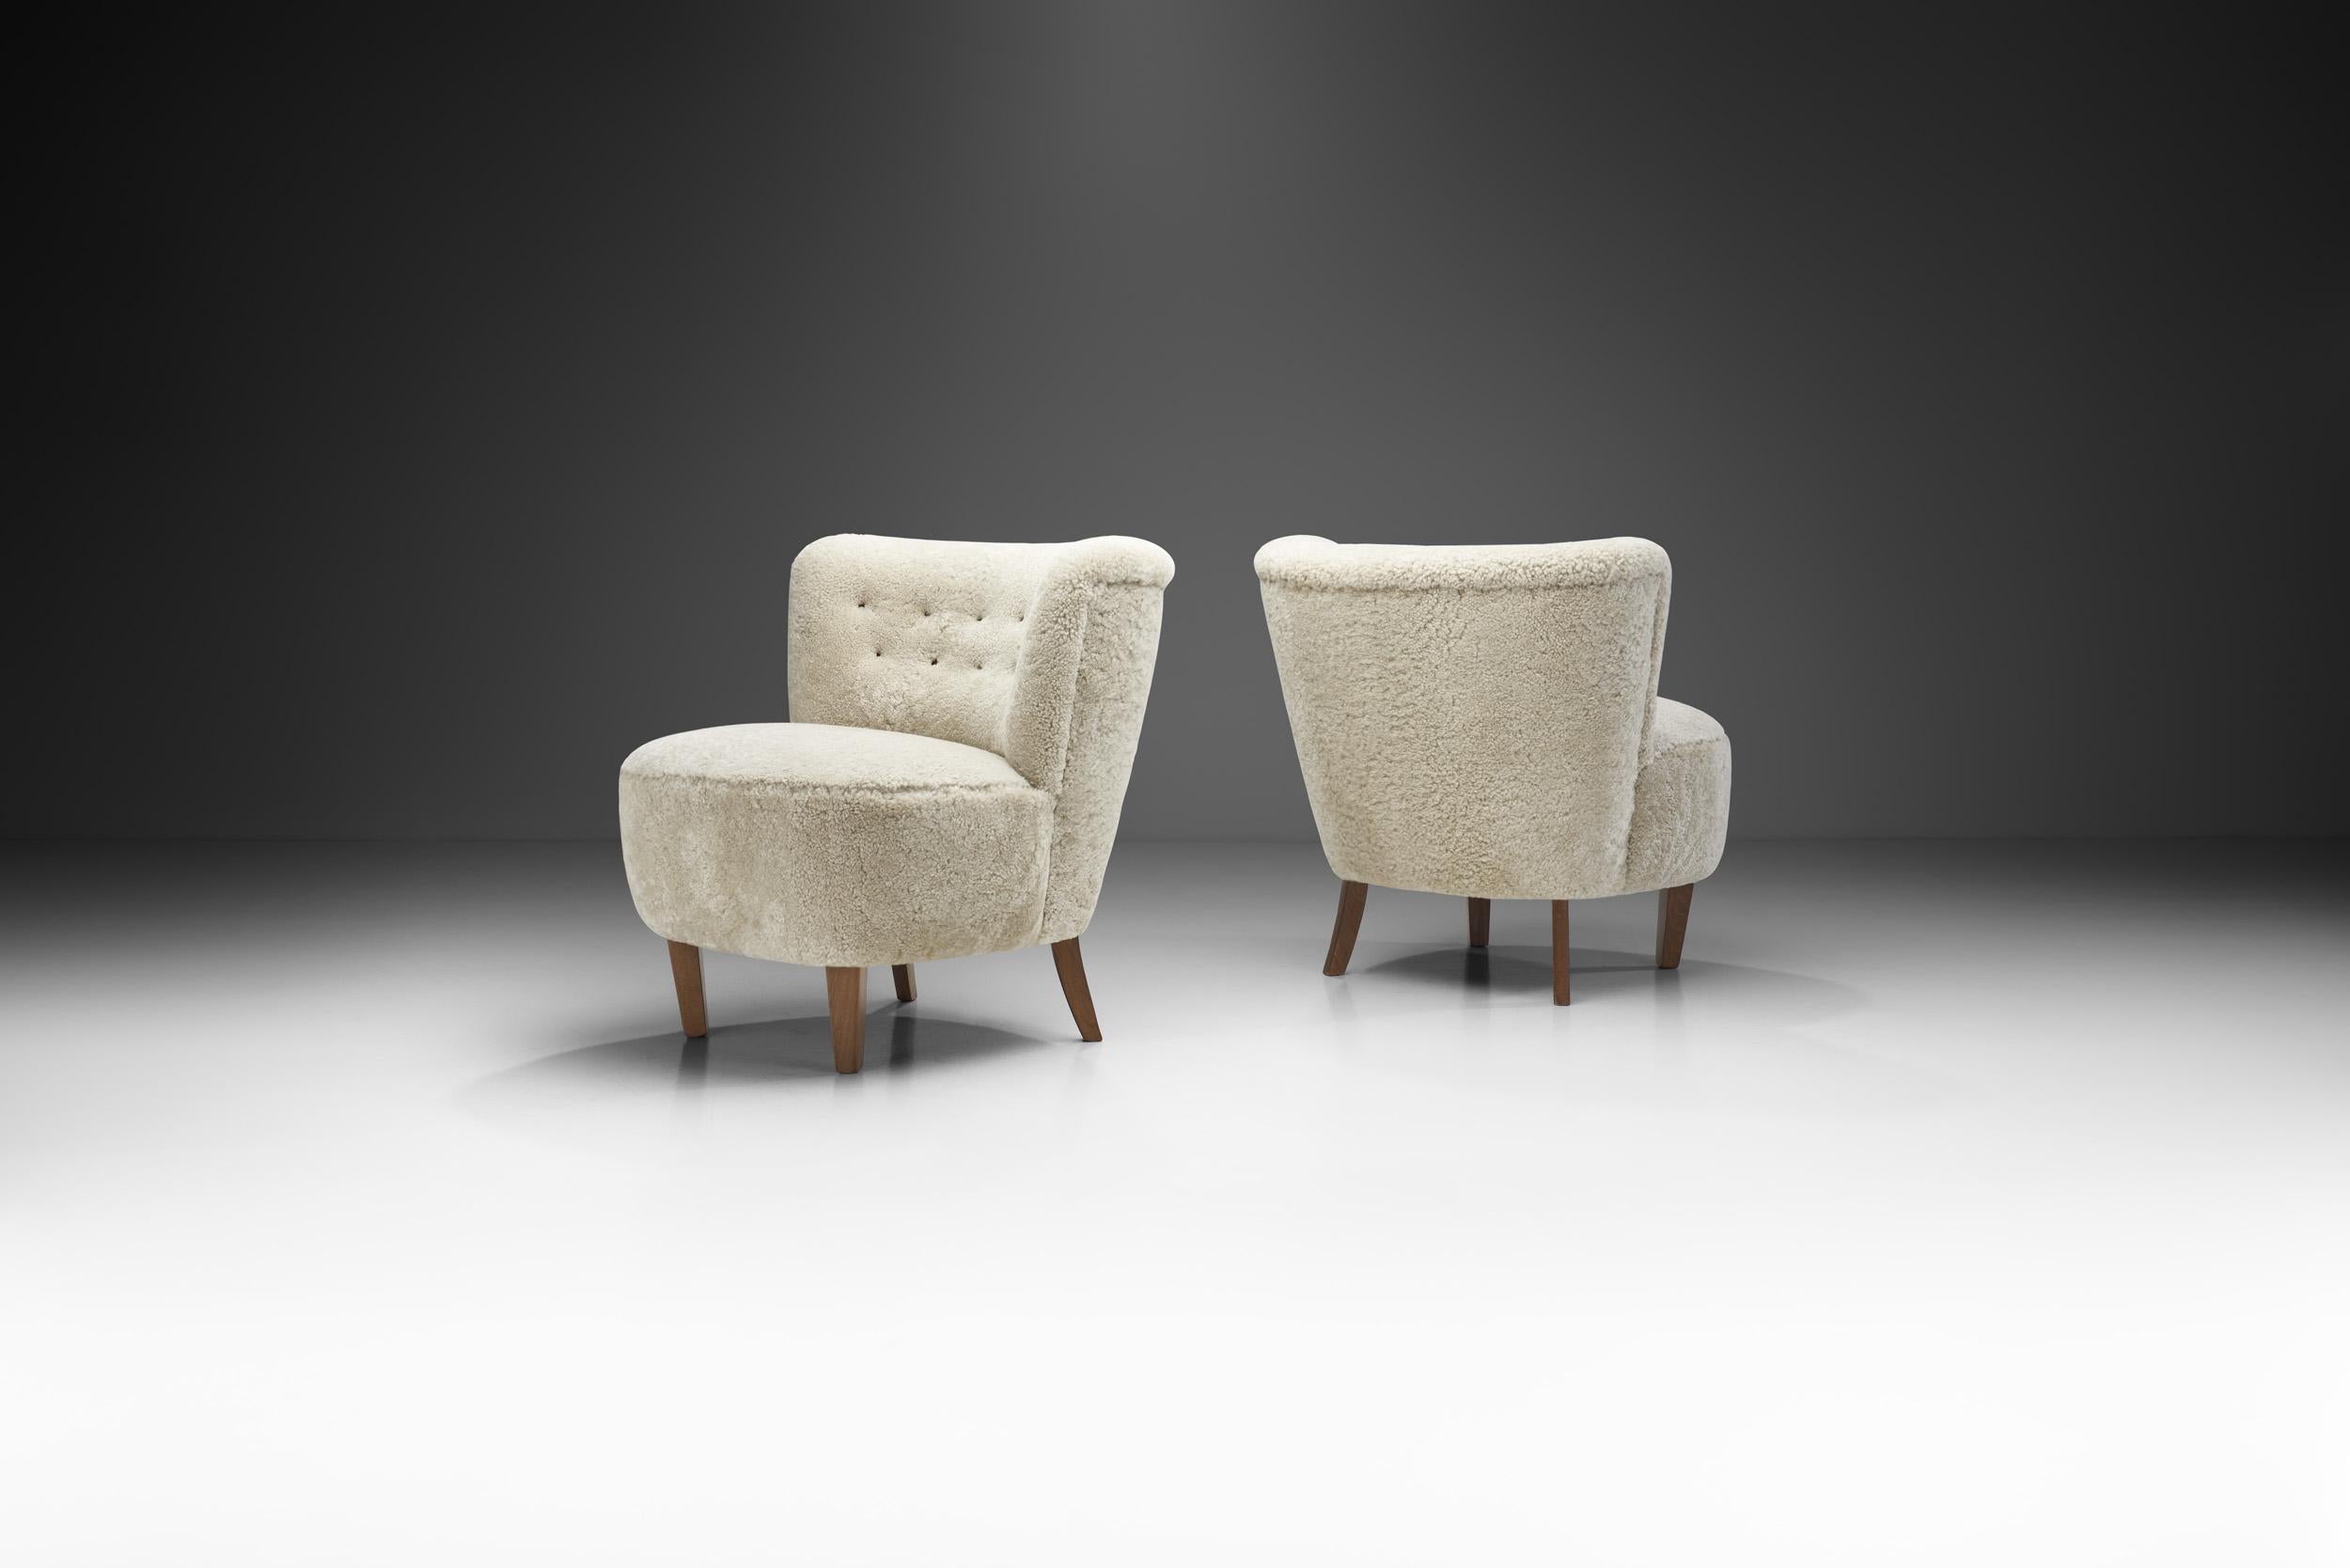 Mid-20th Century Danish Cabinetmaker Lounge Chairs Upholstered in Sheepskin, Denmark ca 1940s